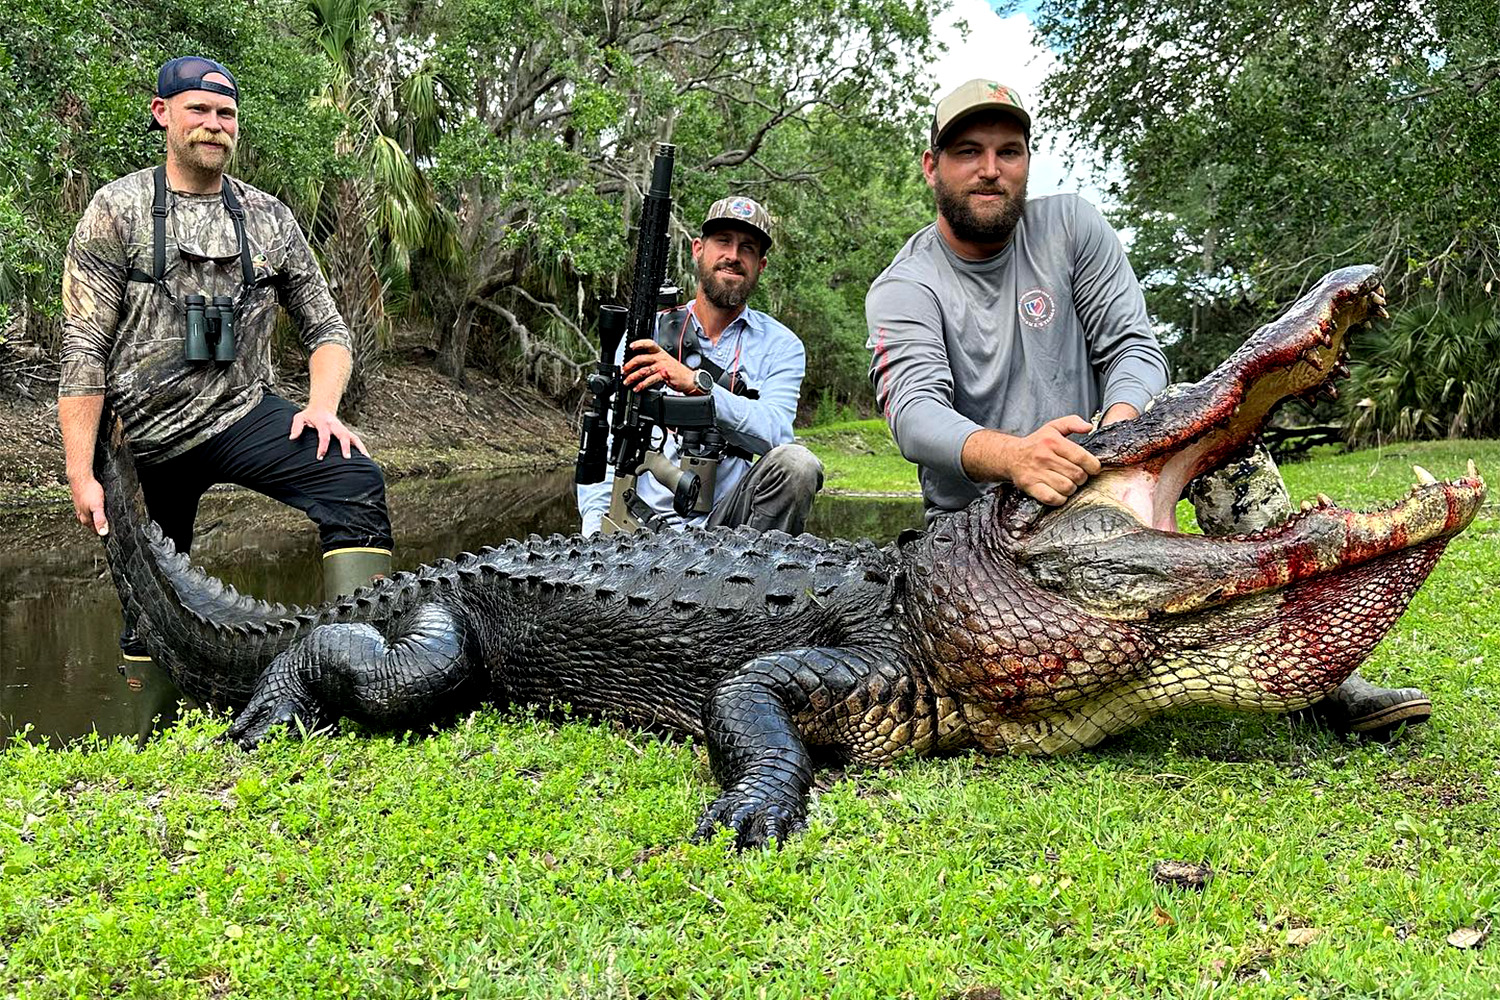 District Leathers Wild American Alligator